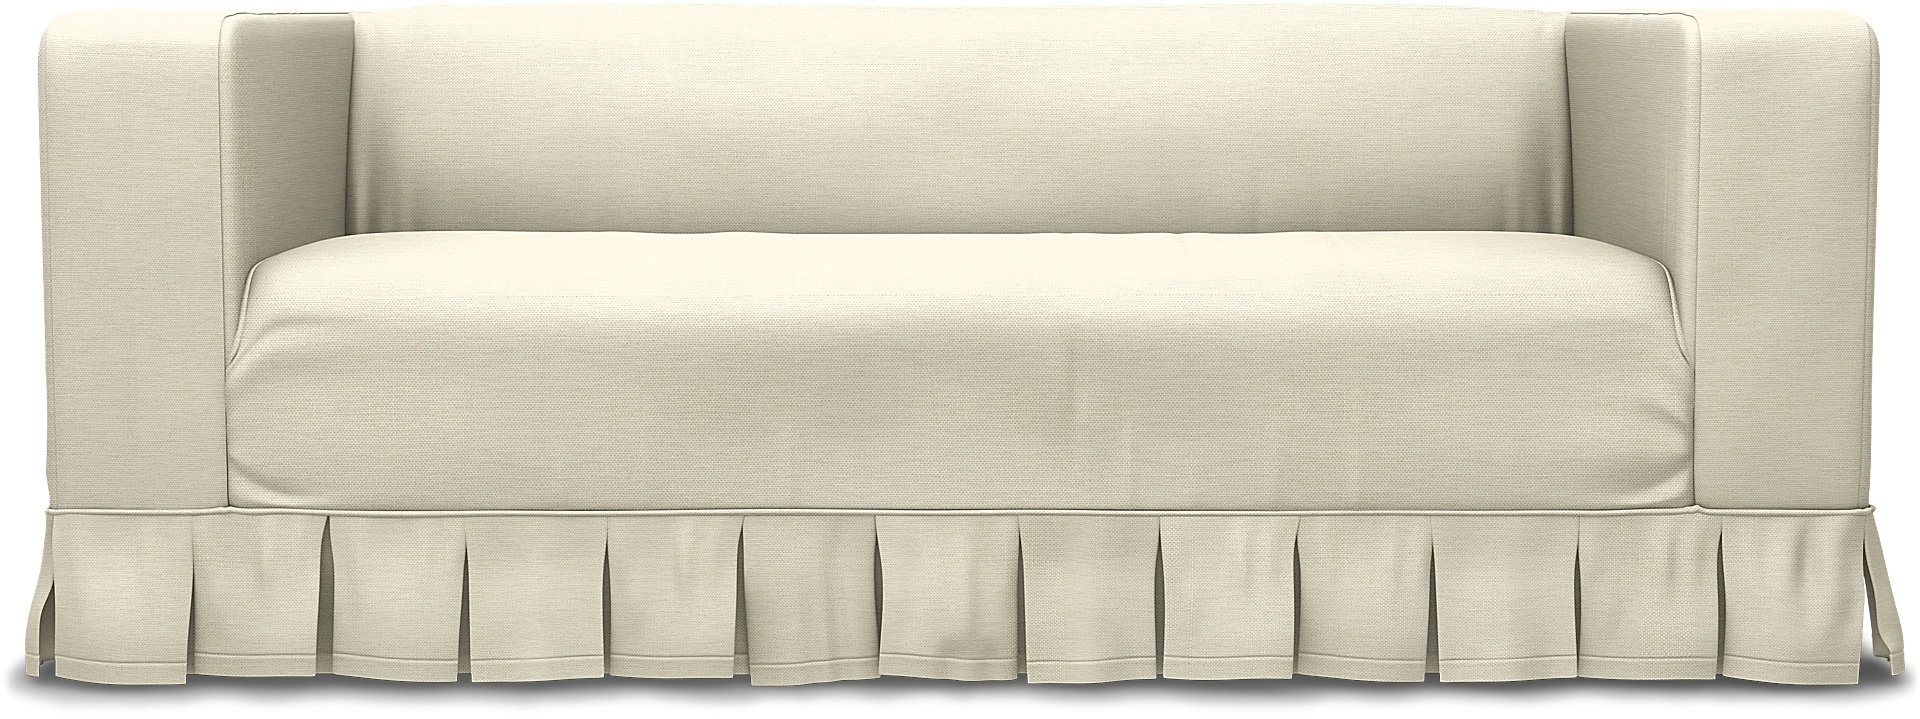 IKEA - Klippan 2 Seater Sofa Cover, Sand Beige, Cotton - Bemz